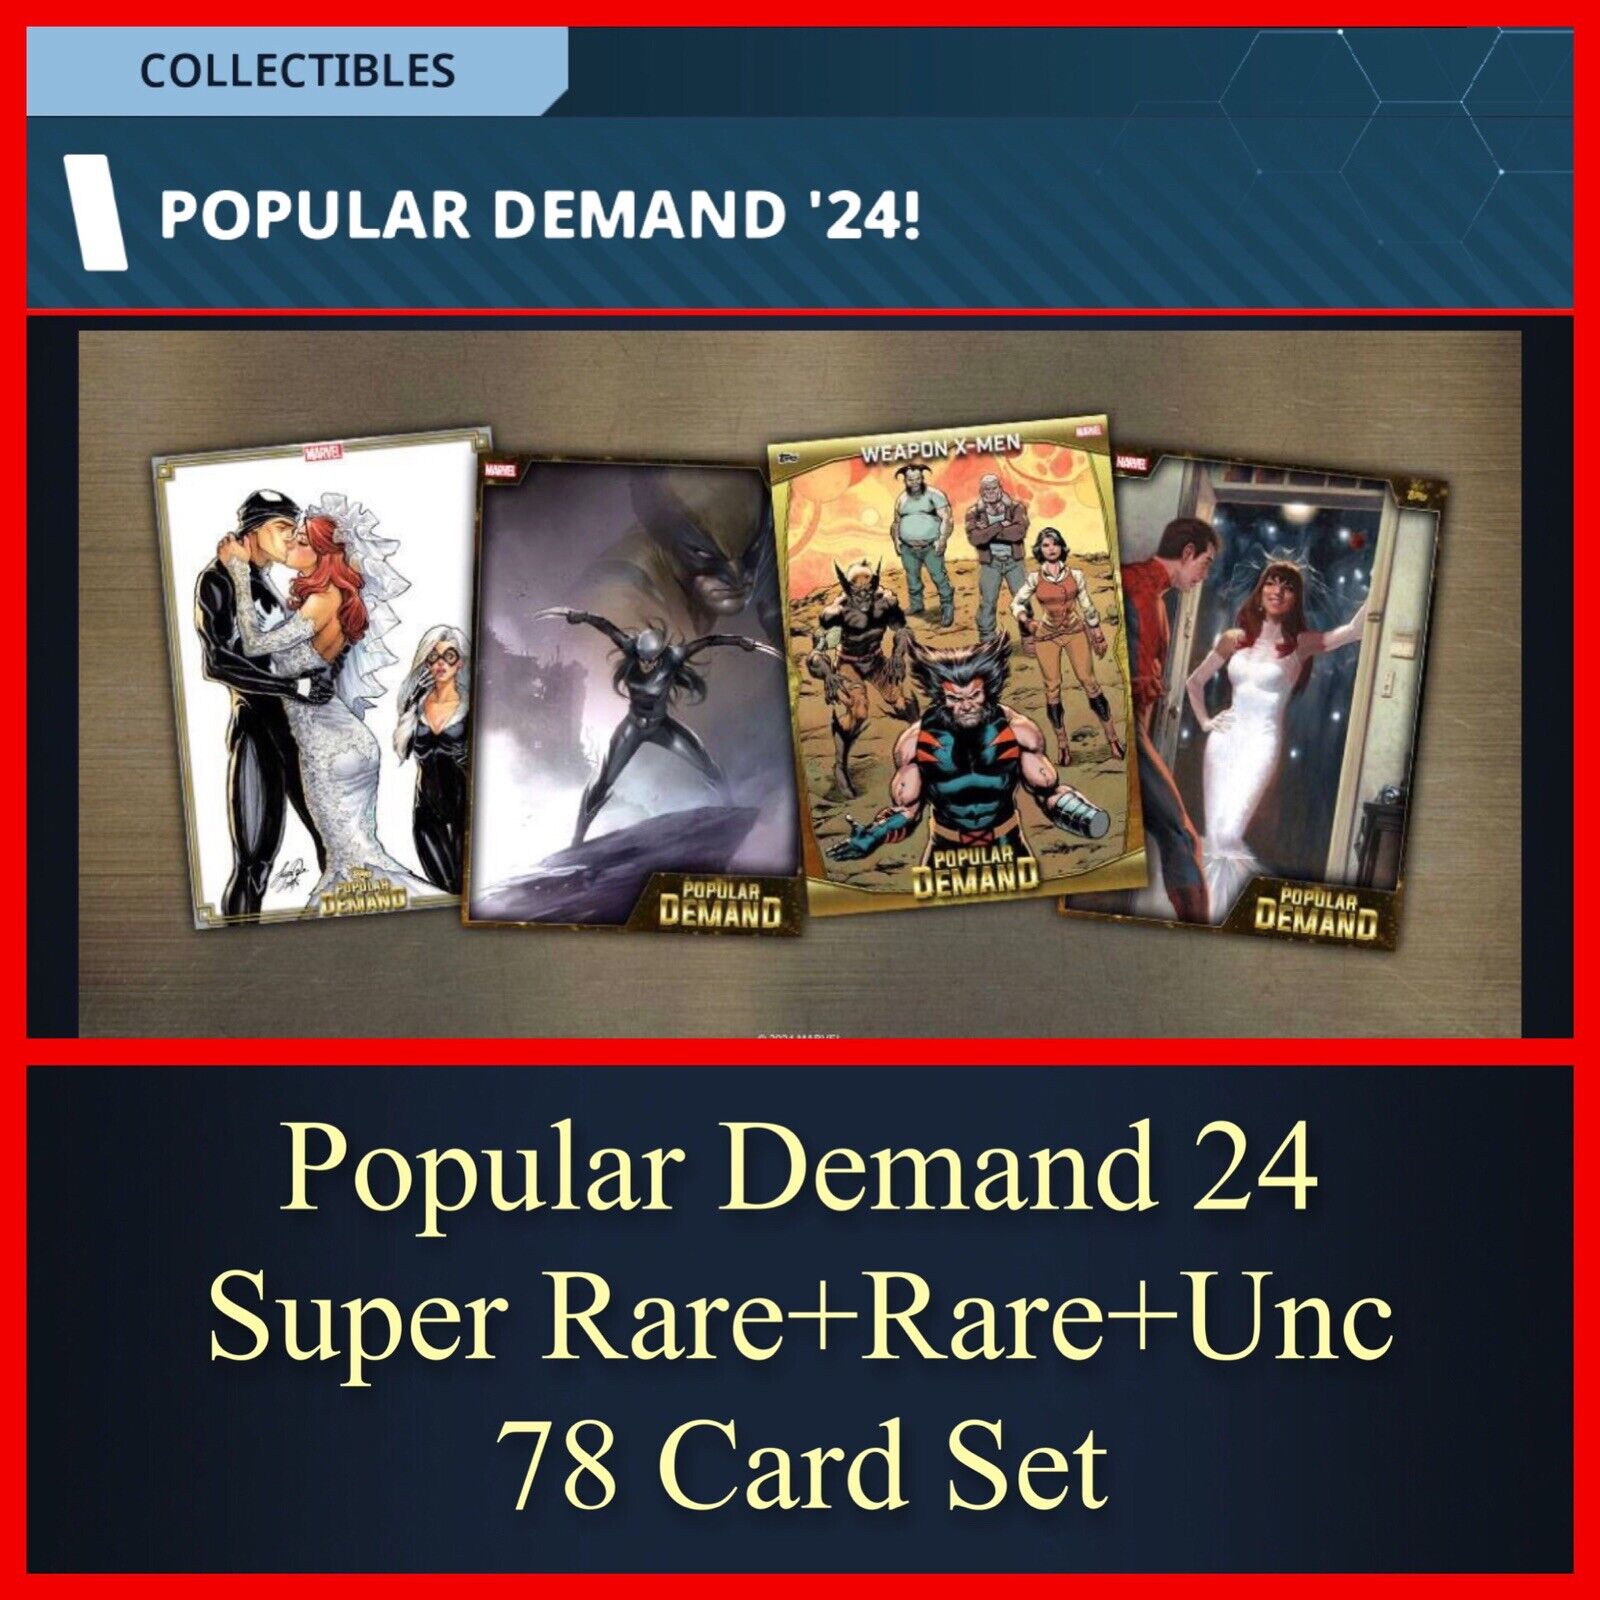 POPULAR DEMAND ‘24-SUPER RARE+RARE+UNC 78 CARD SET-TOPPS MARVEL COLLECT